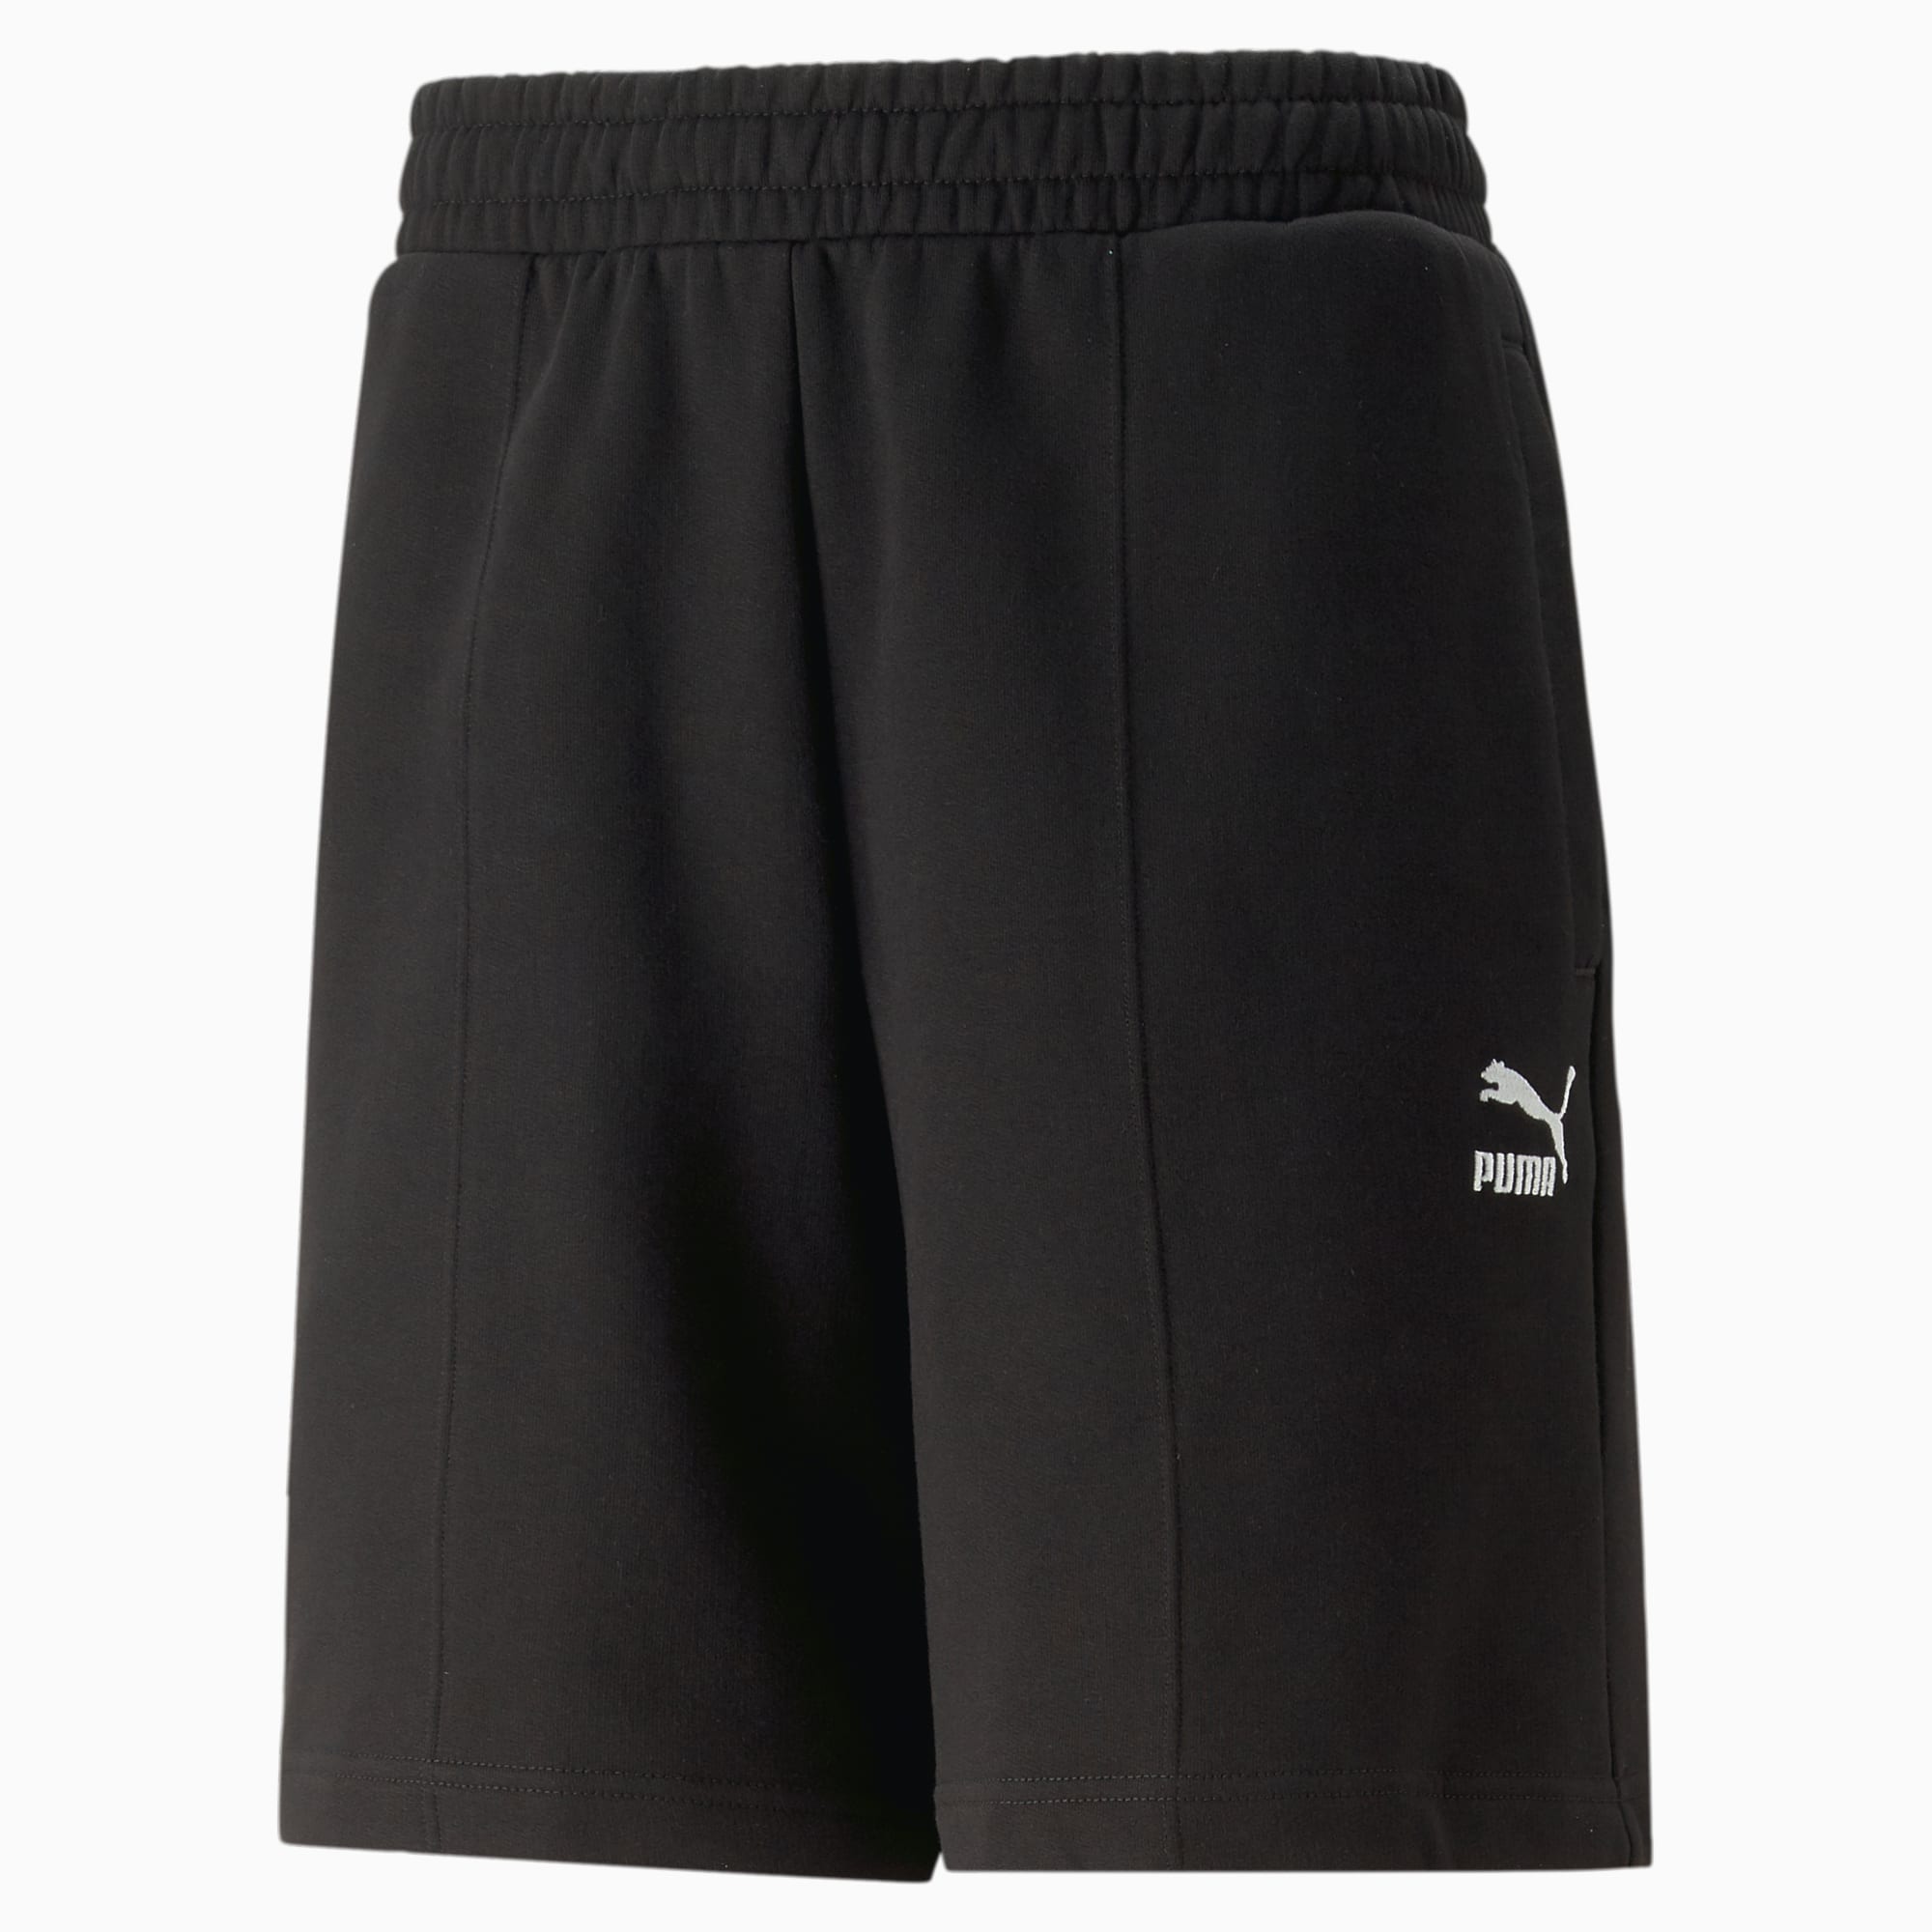 Puma / shorts Classics Pintuck Tr in zwart